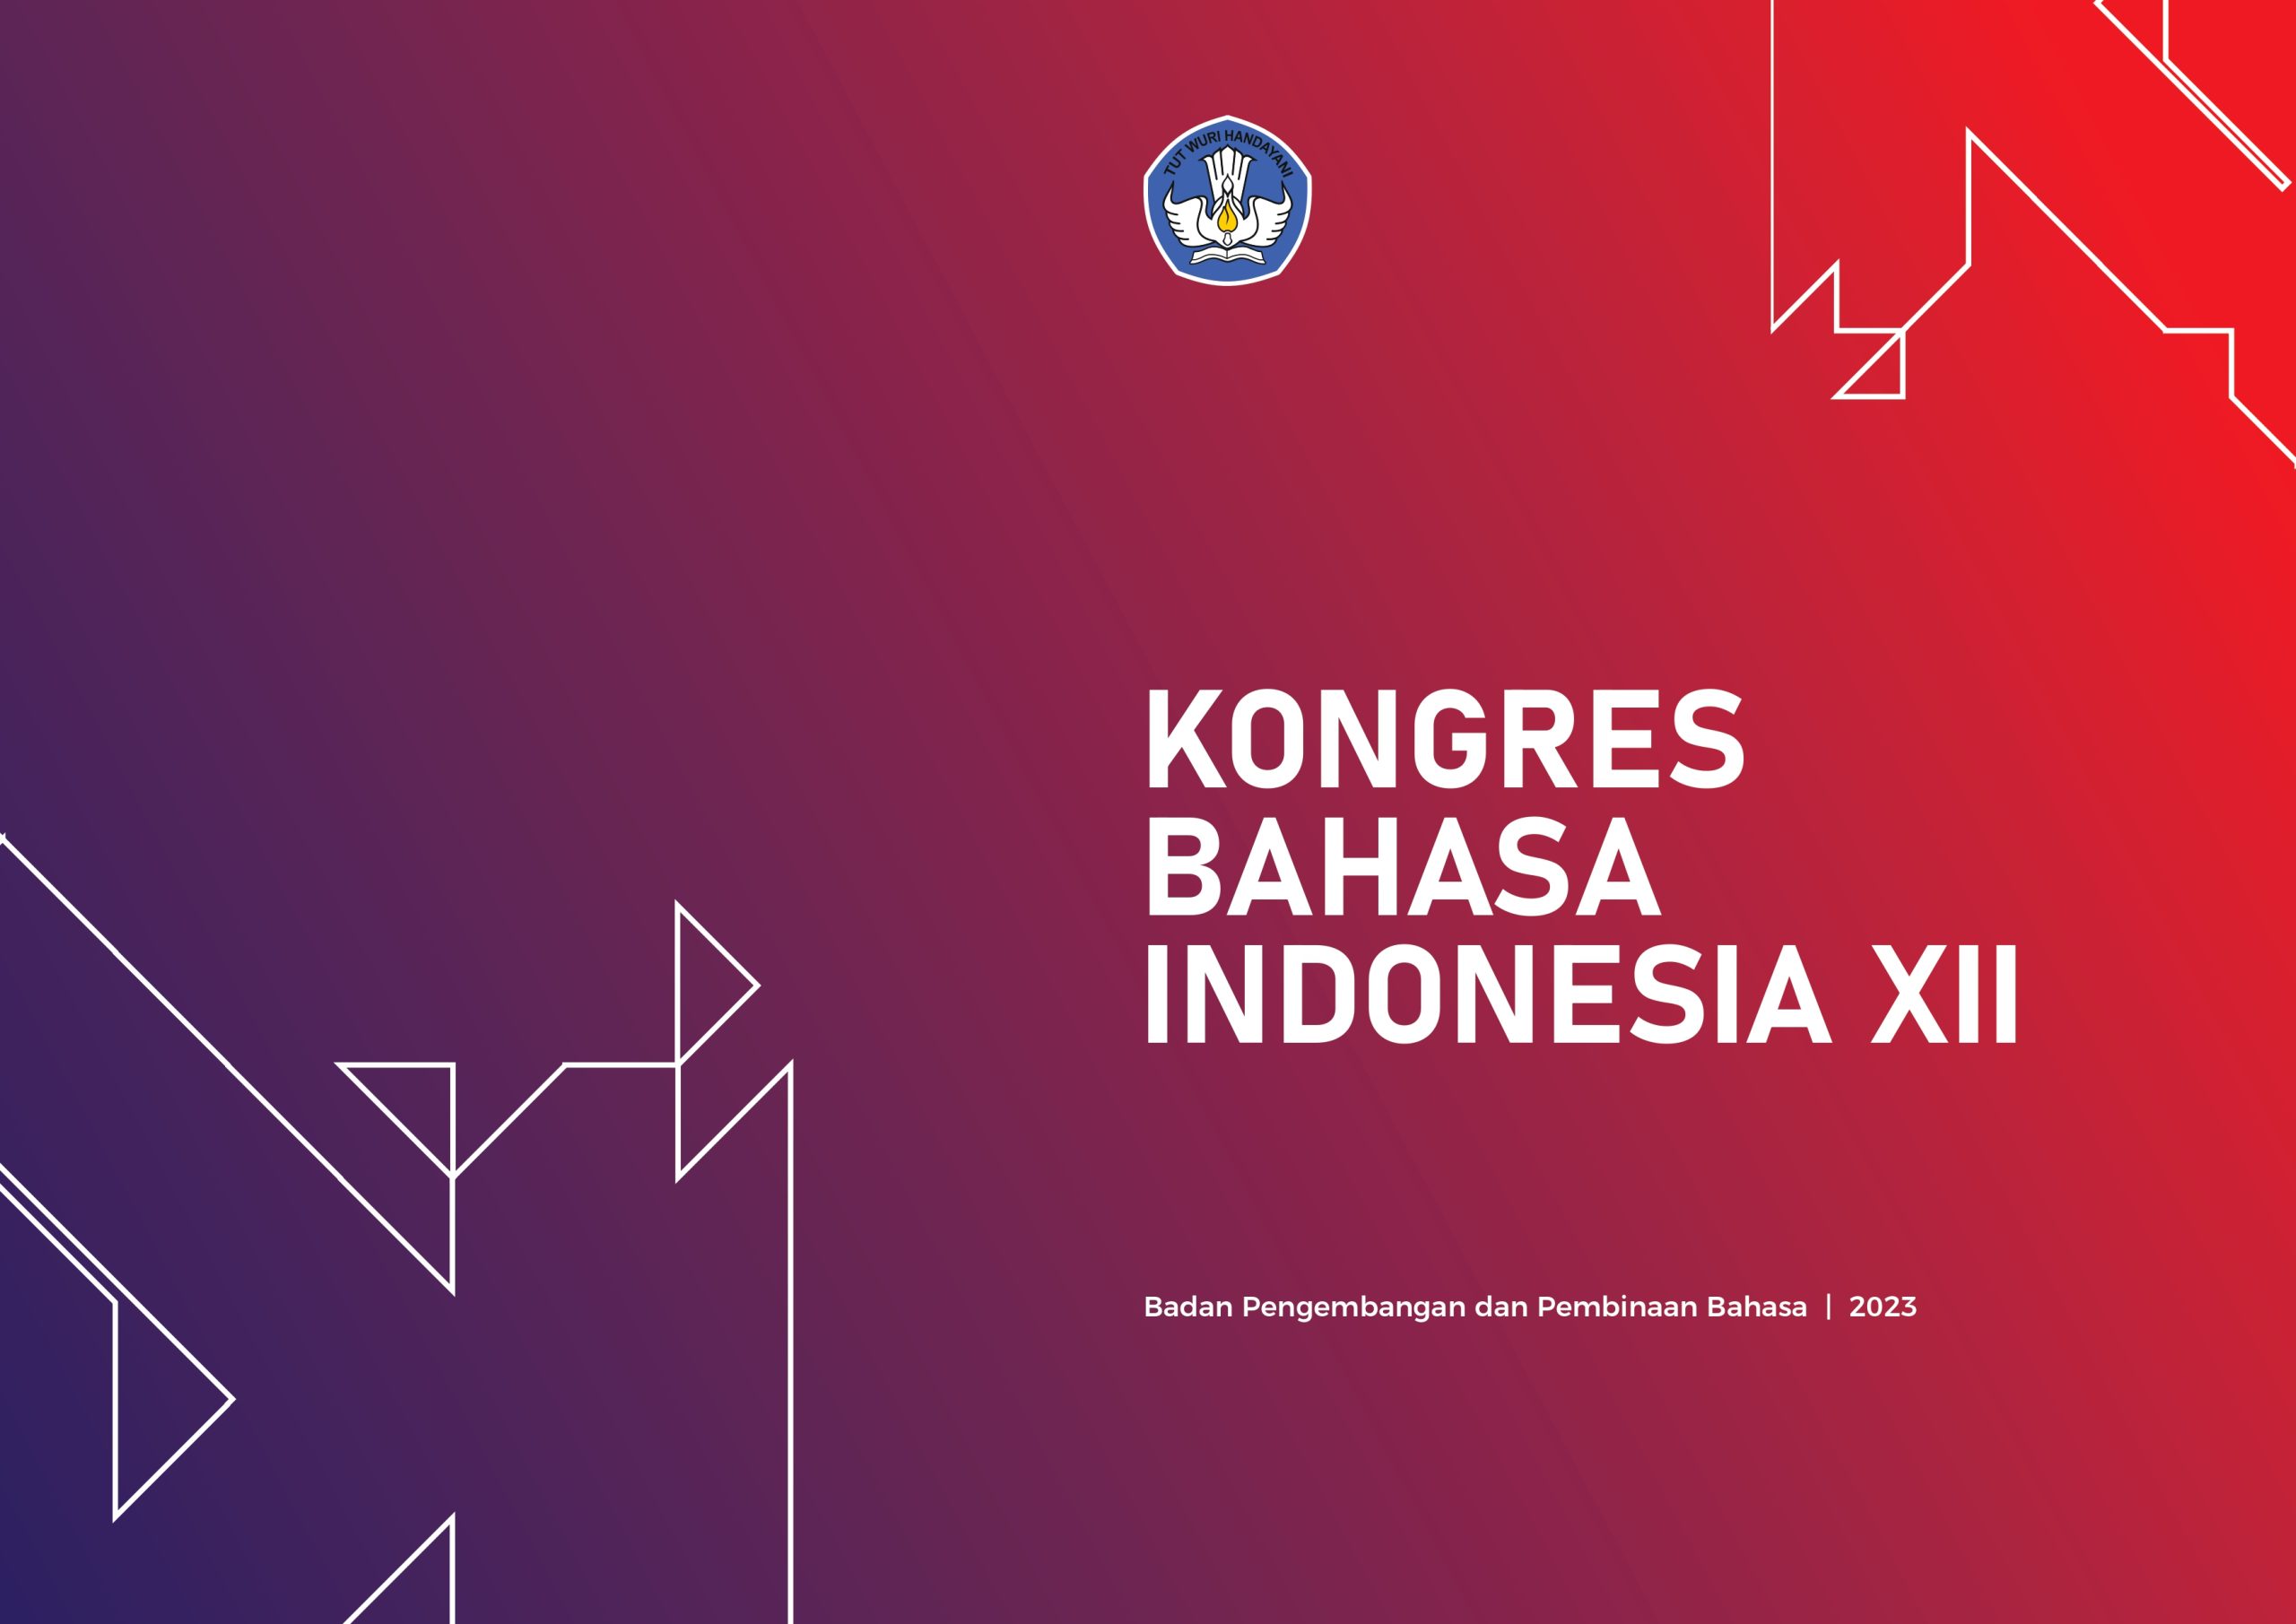 Kongres Bahasa Indonesia XII